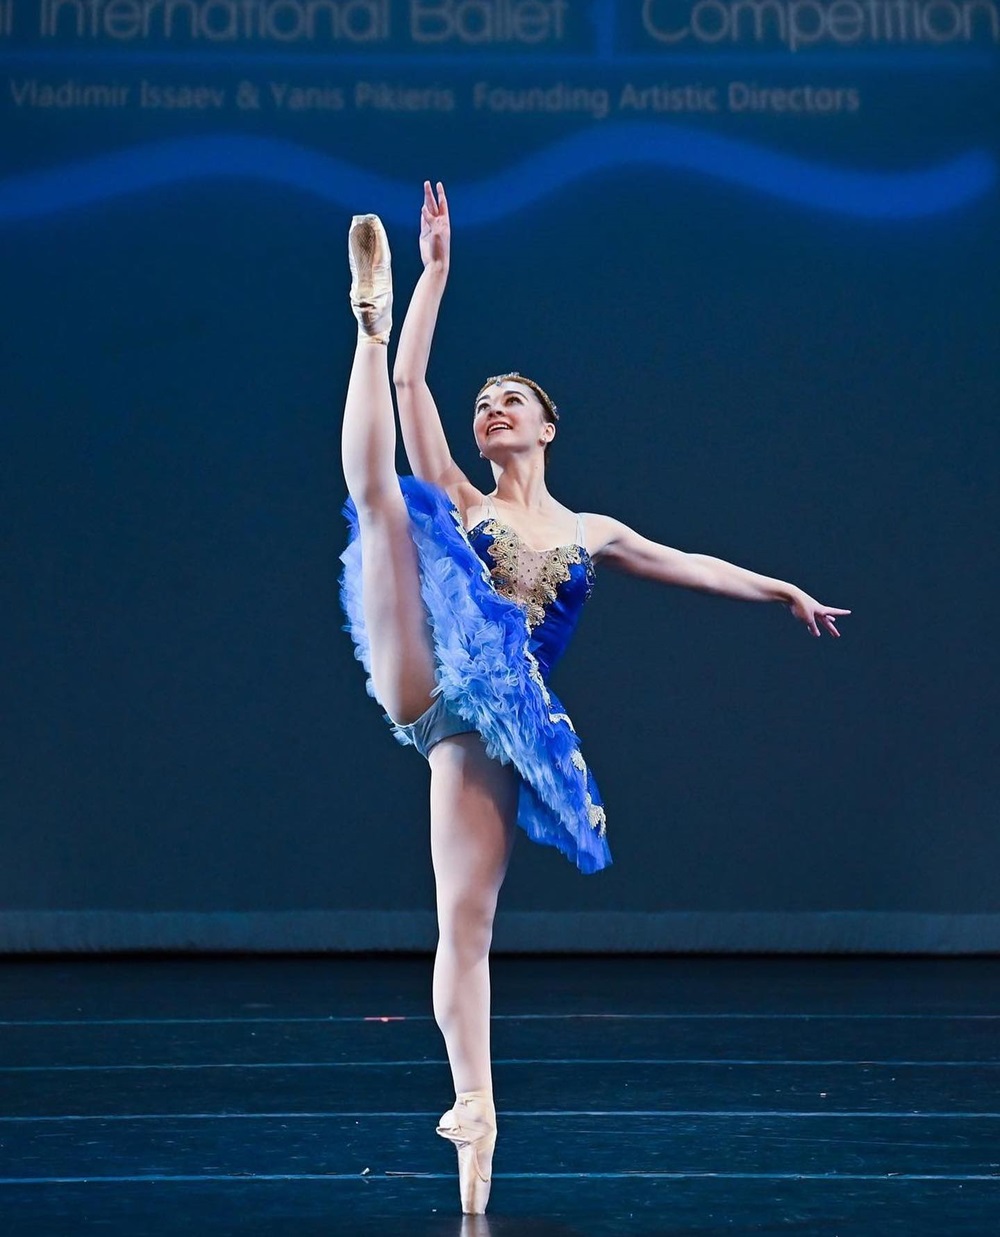 Miami International Ballet Competition, Photo credit Patricia Laine Romero